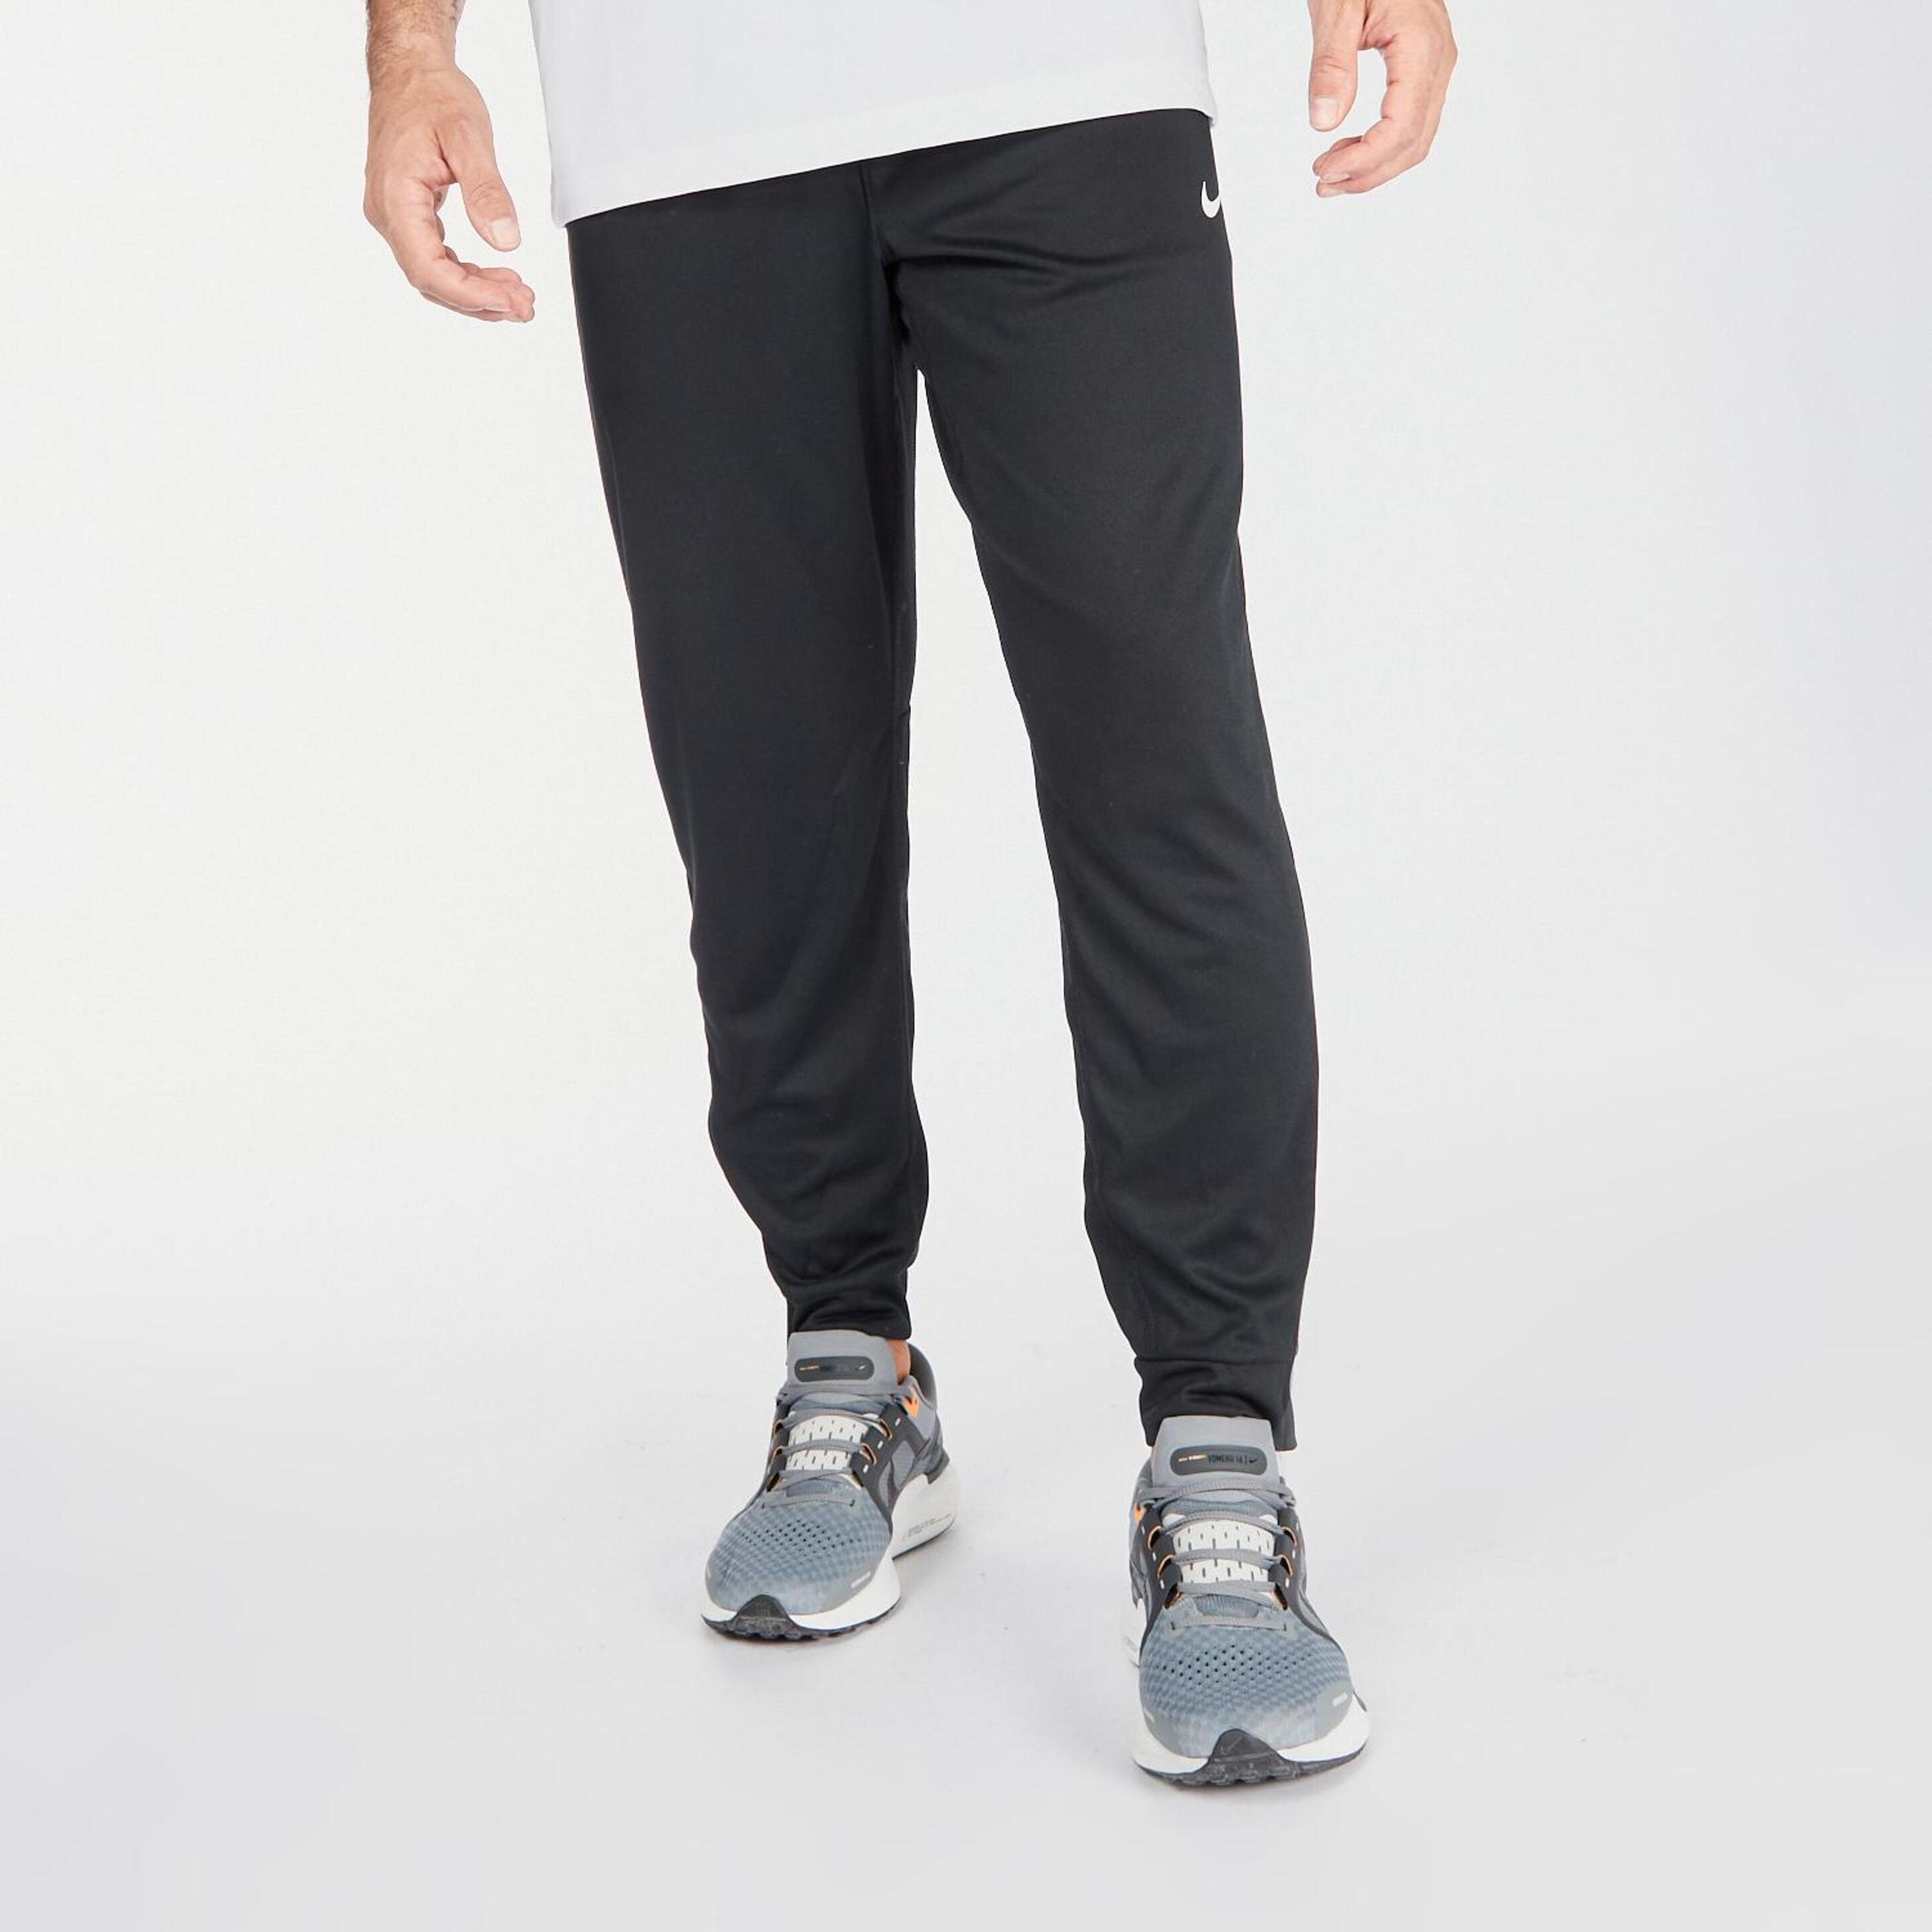 Nike Totally - negro - Pantalón Chándal Hombre